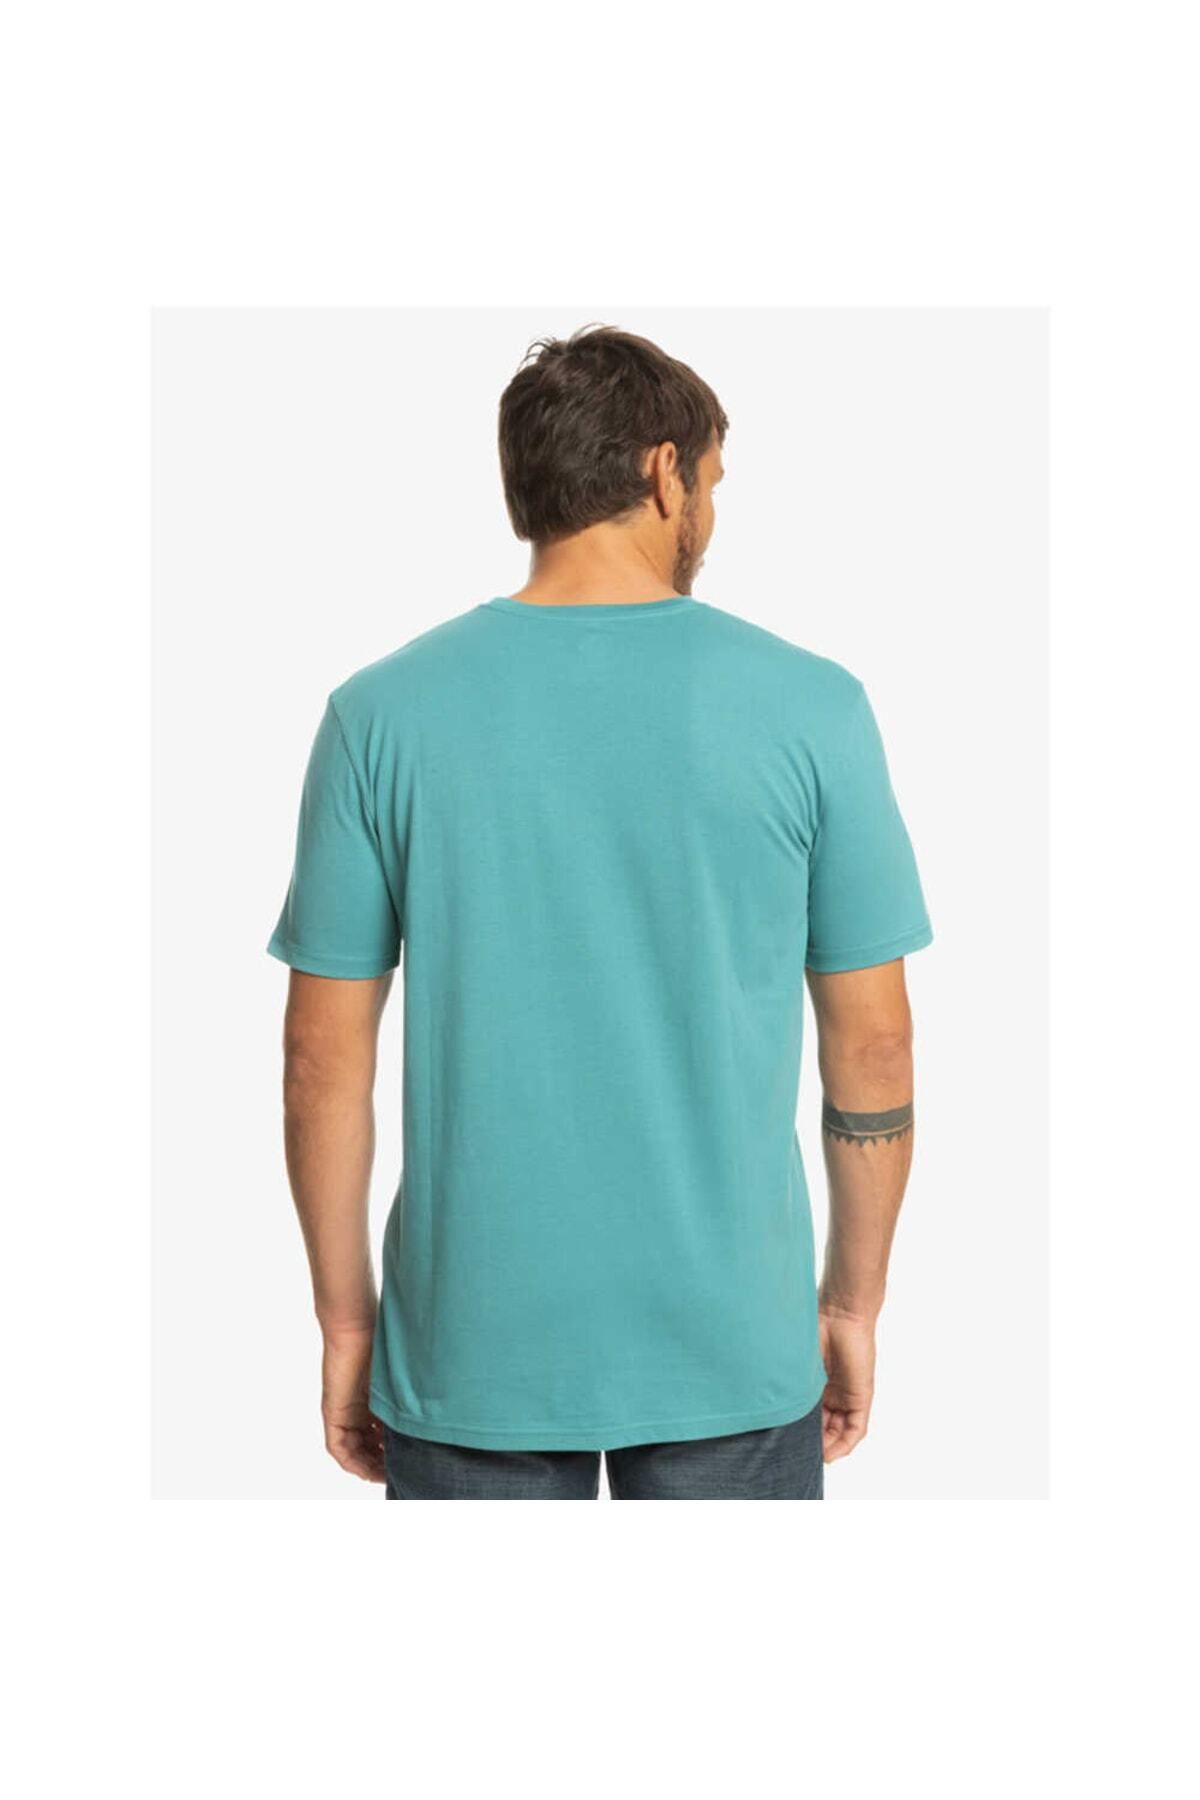 Quiksilver Complogo Tees Erkek Kısa Kollu T-shirt Mavi